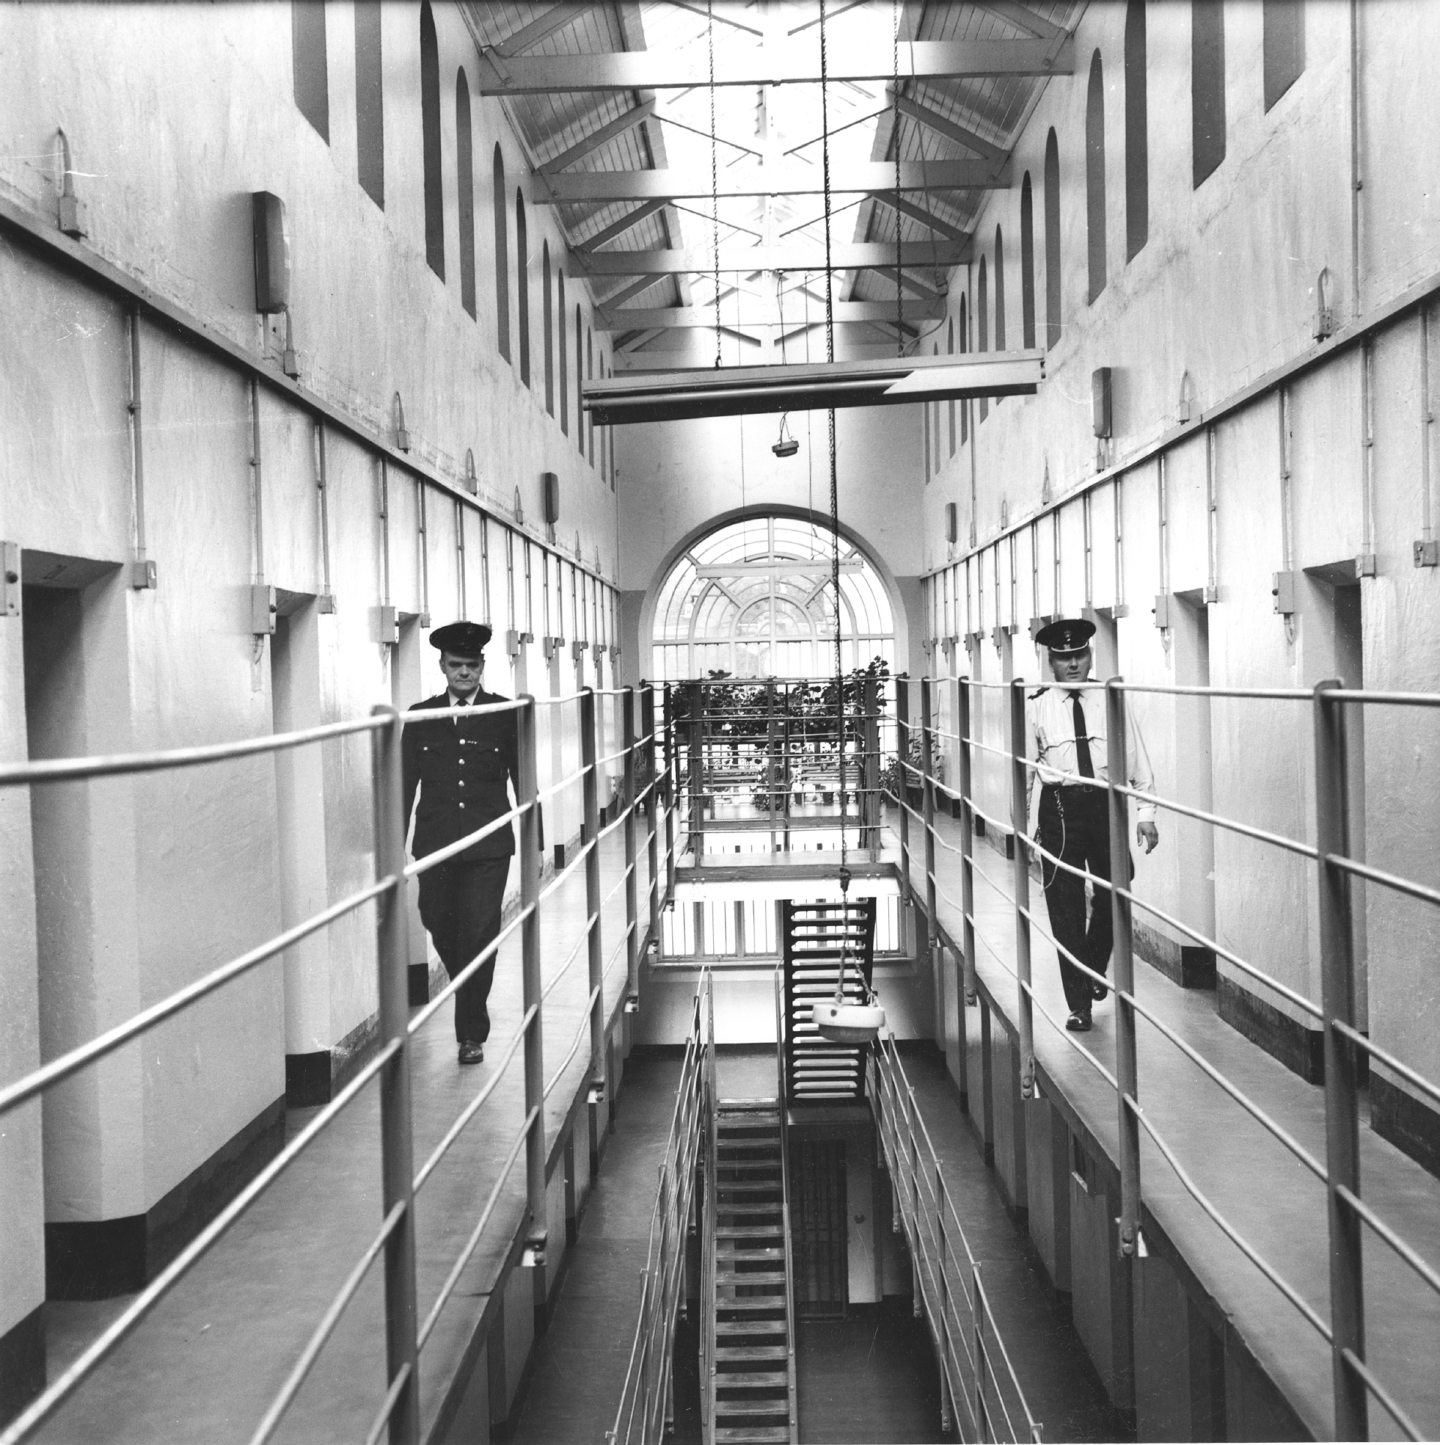 Guards walking in a corridor at Peterhead Prison